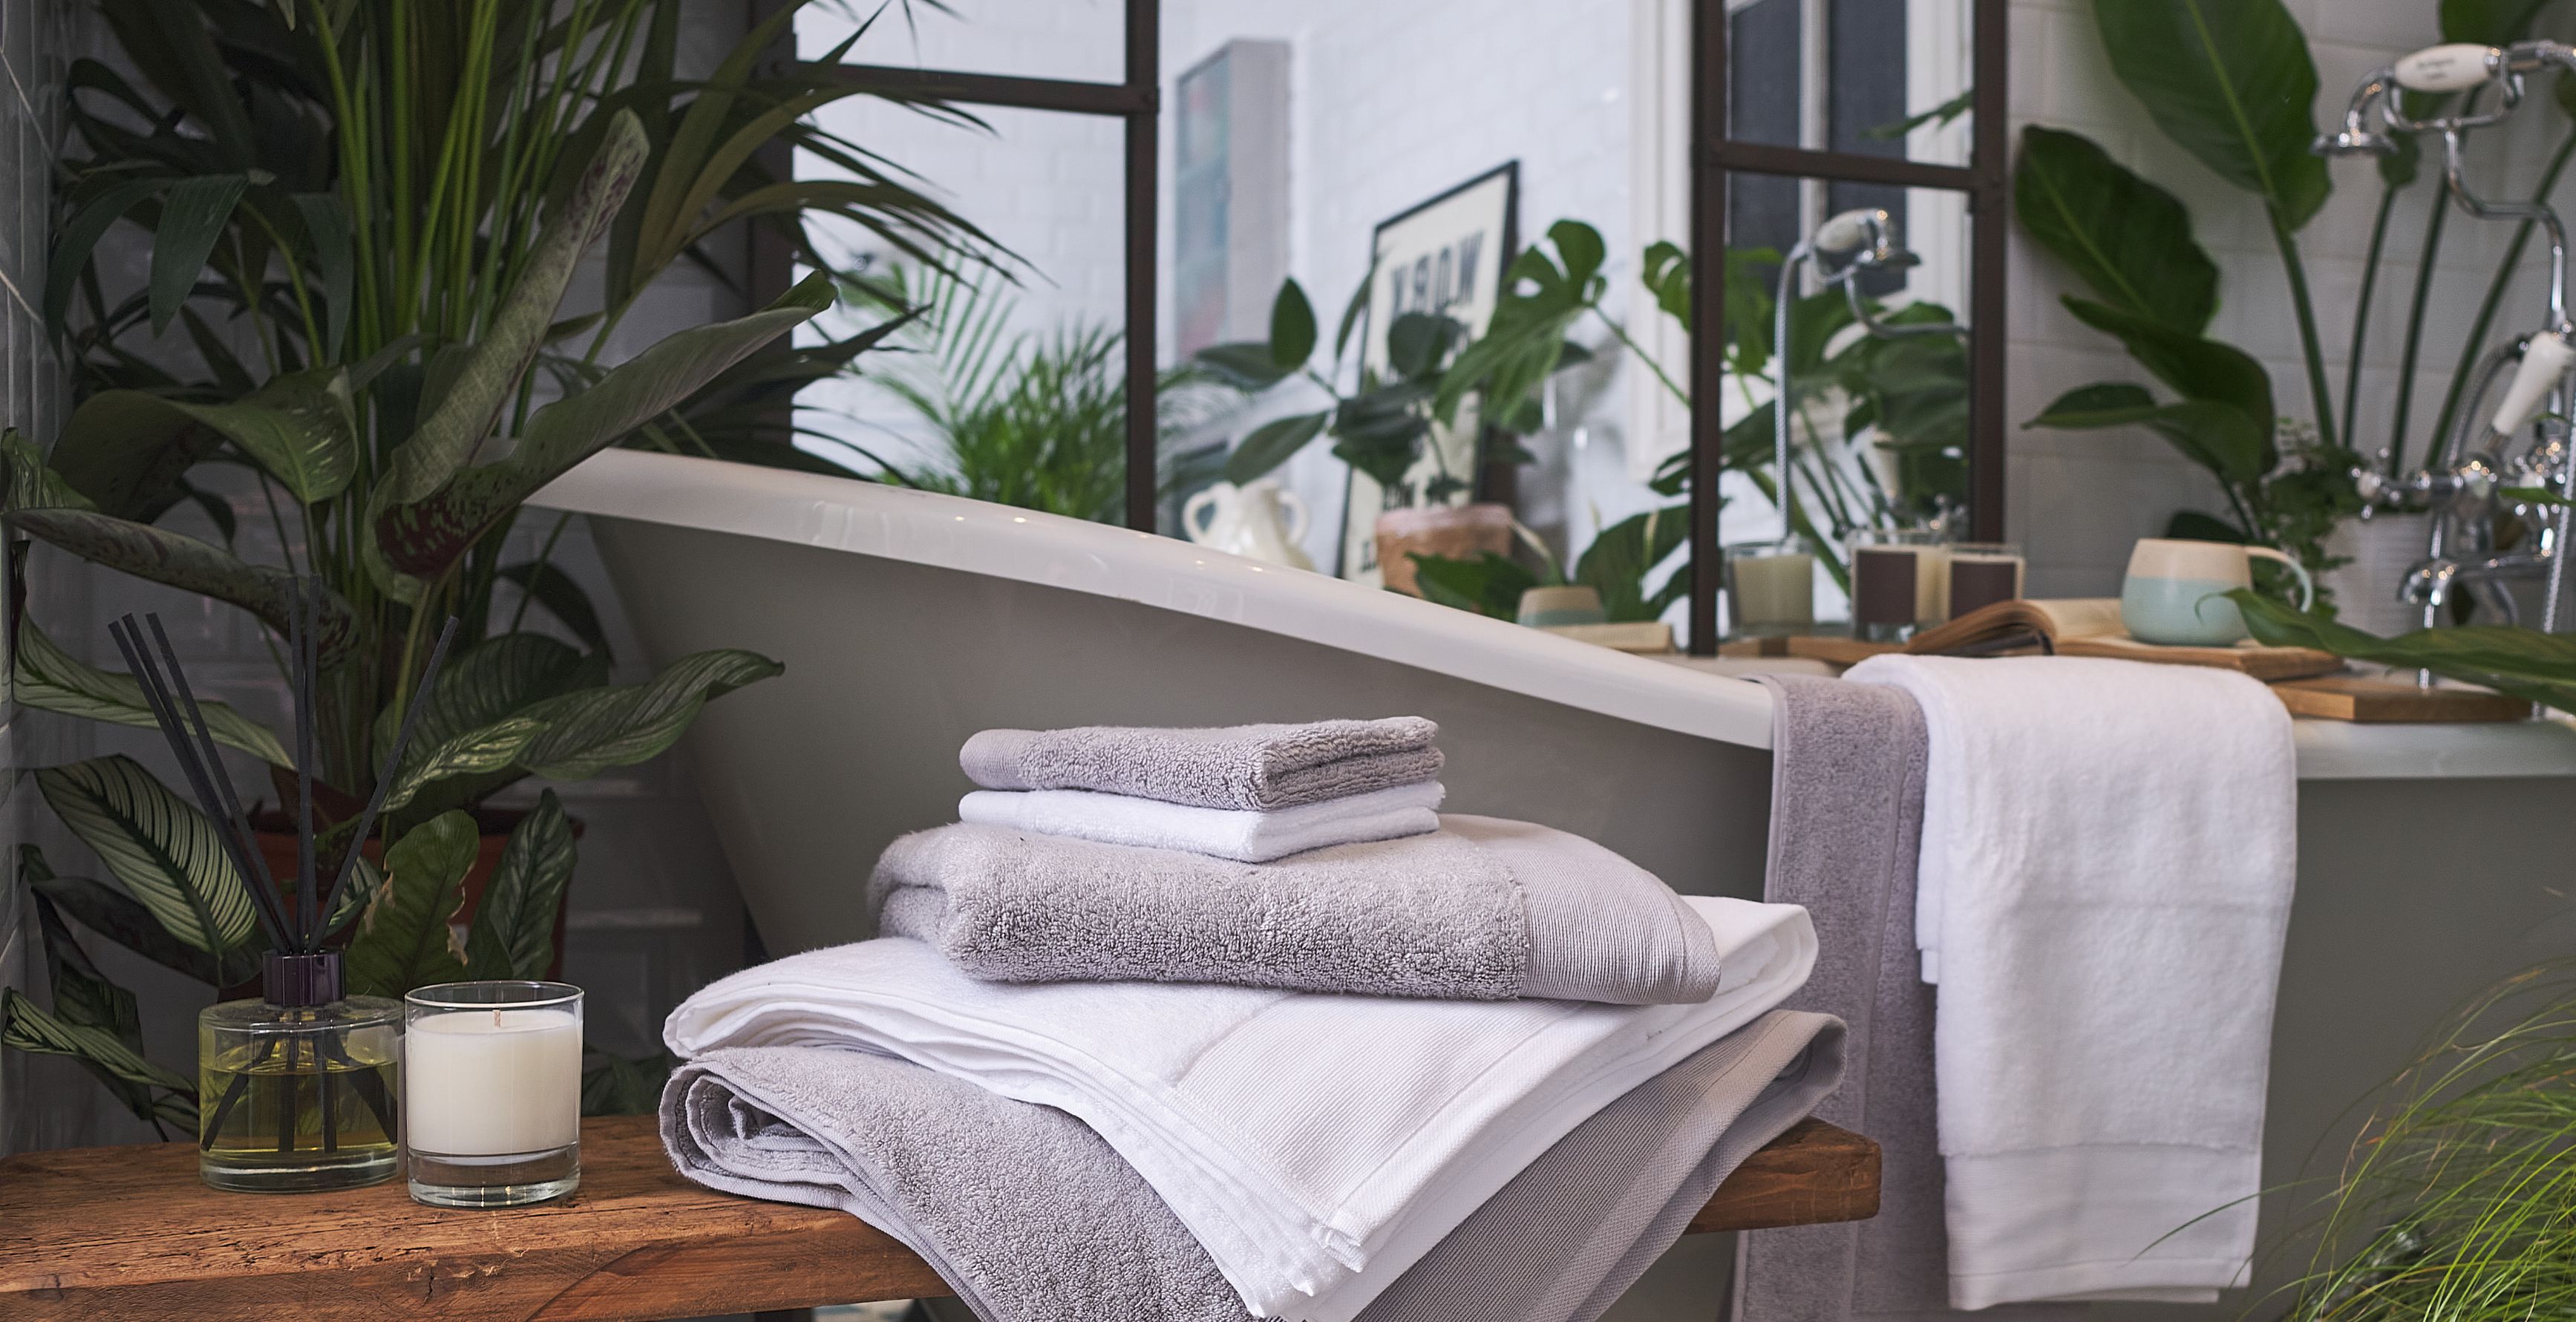 Bathroom Towels and plants